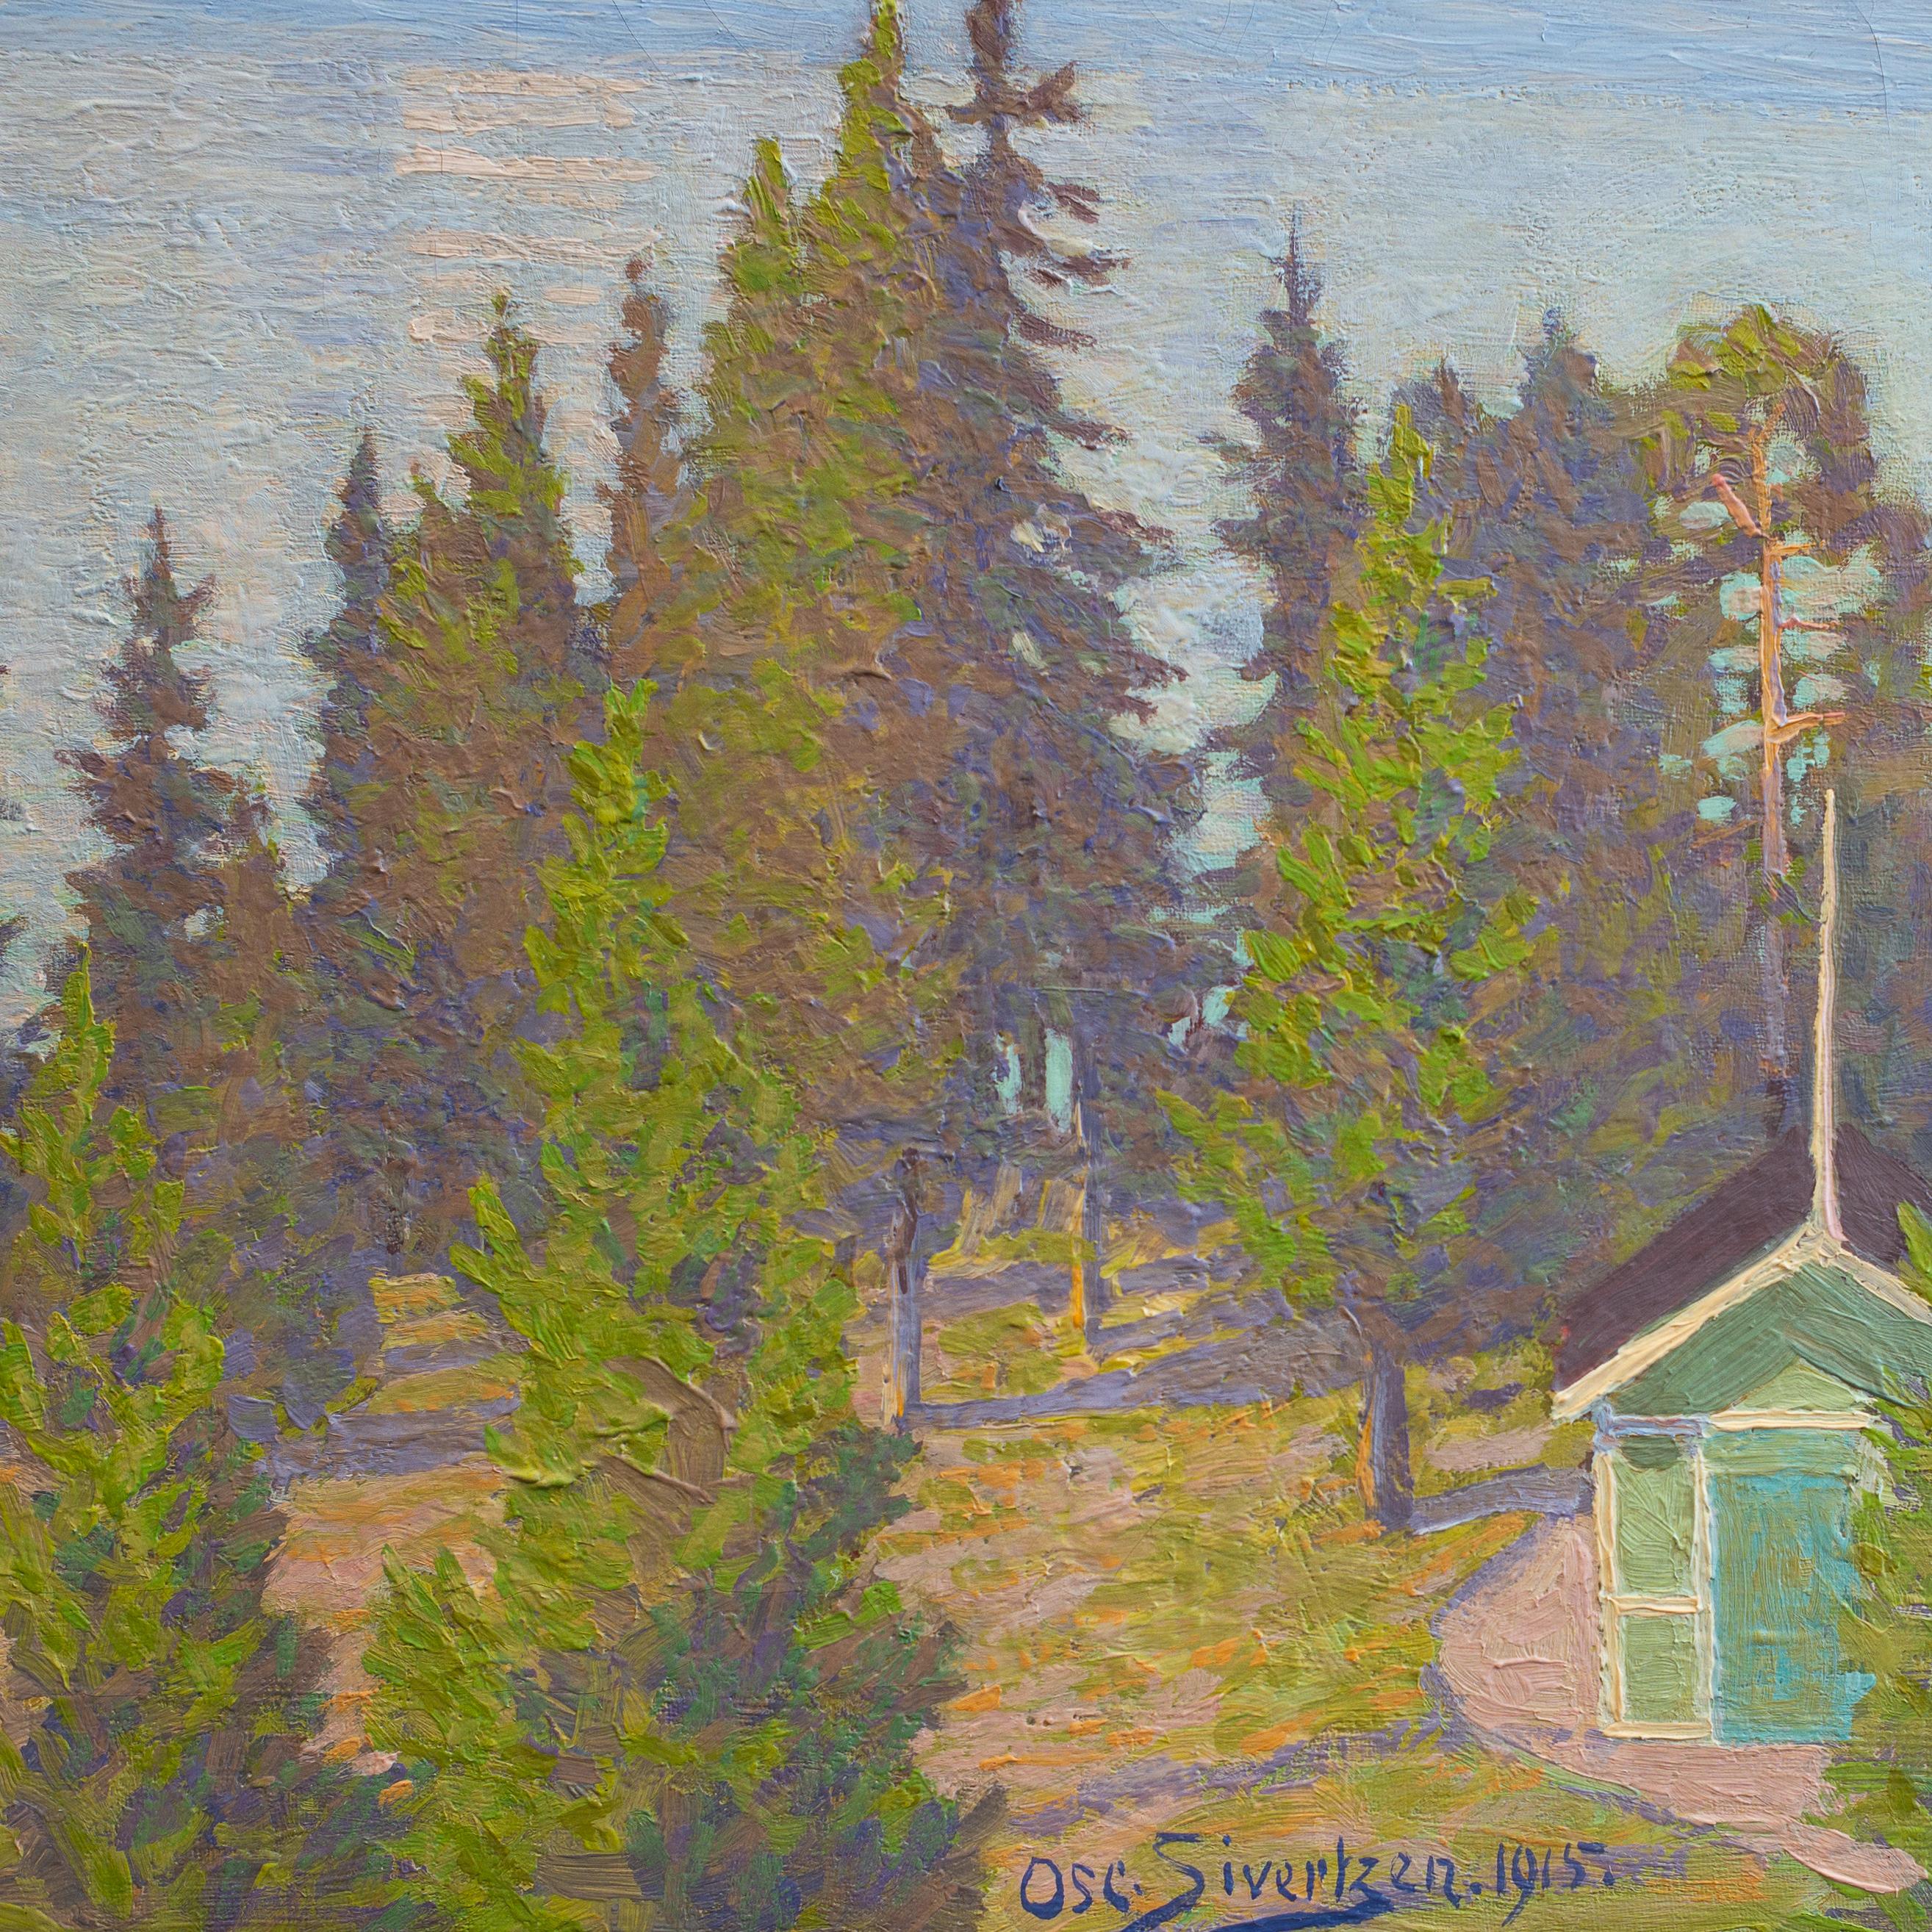 Fjord Landscape by Norwegian Artist Oscar Sivertzen (Sivertsen), Painted 1915 2